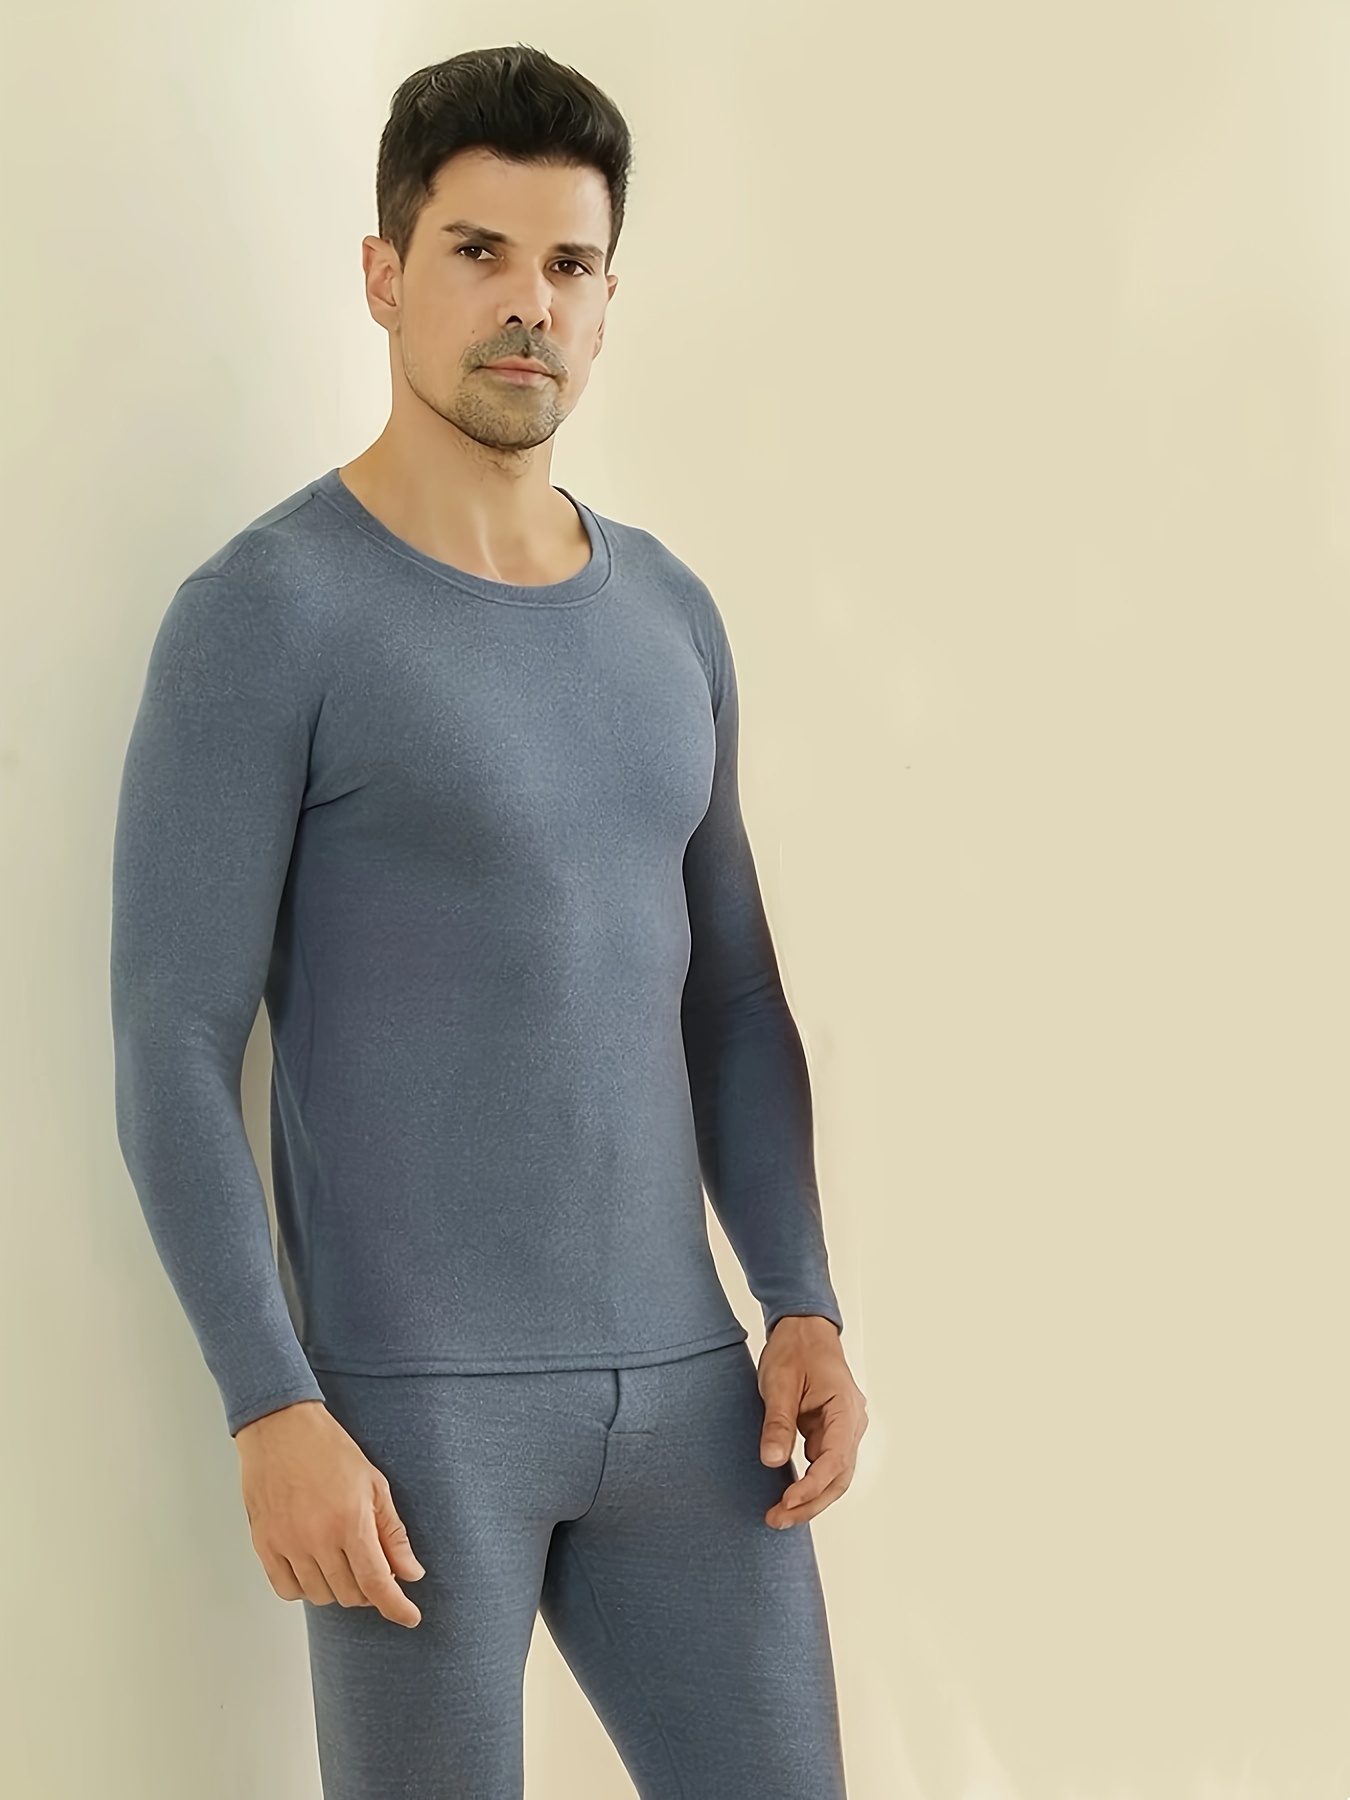 Men's Thermal Underwear, Long John Base Layer Lined Top Free Shipping